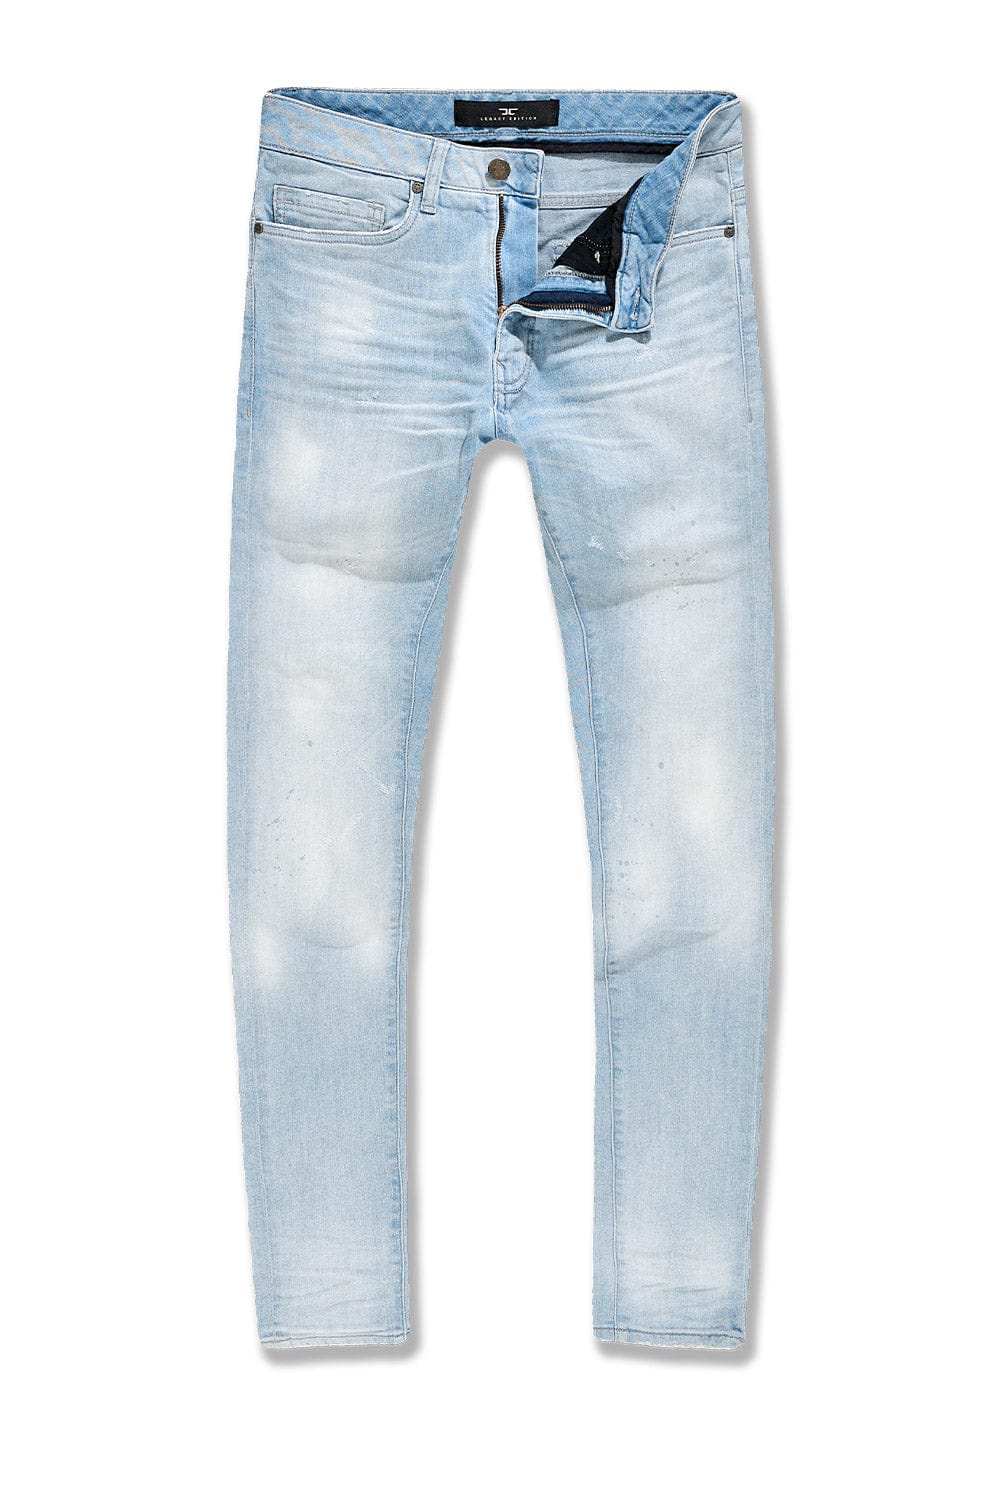 JC GERONIMO slim jeans Sea Glass  js1189